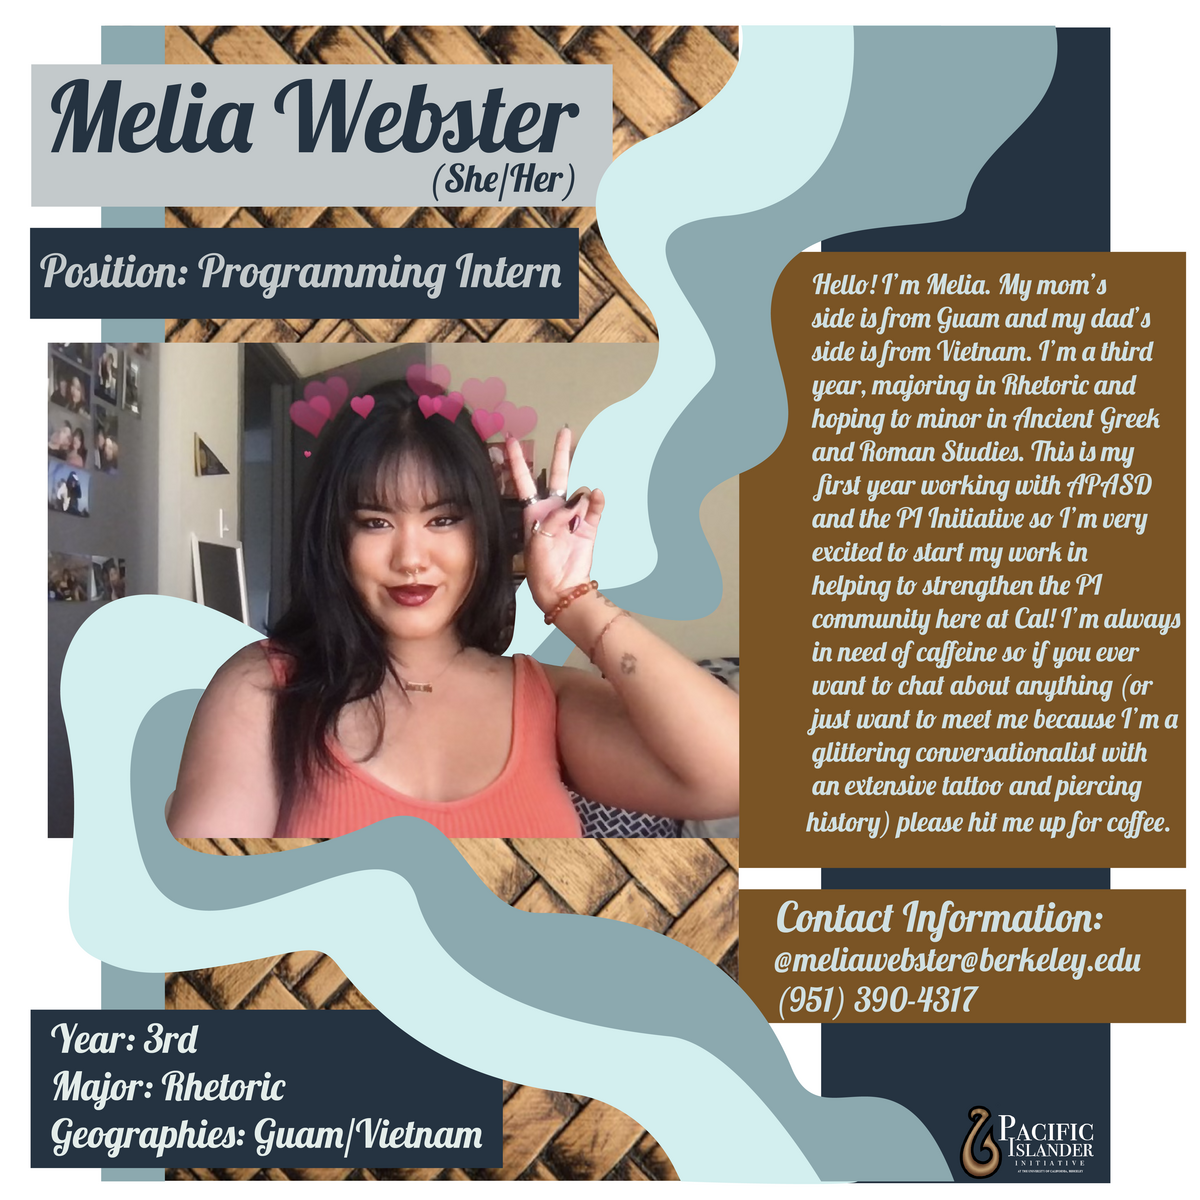 Contact Melia (Programming Intern) at meliawebster@berkeley.edu